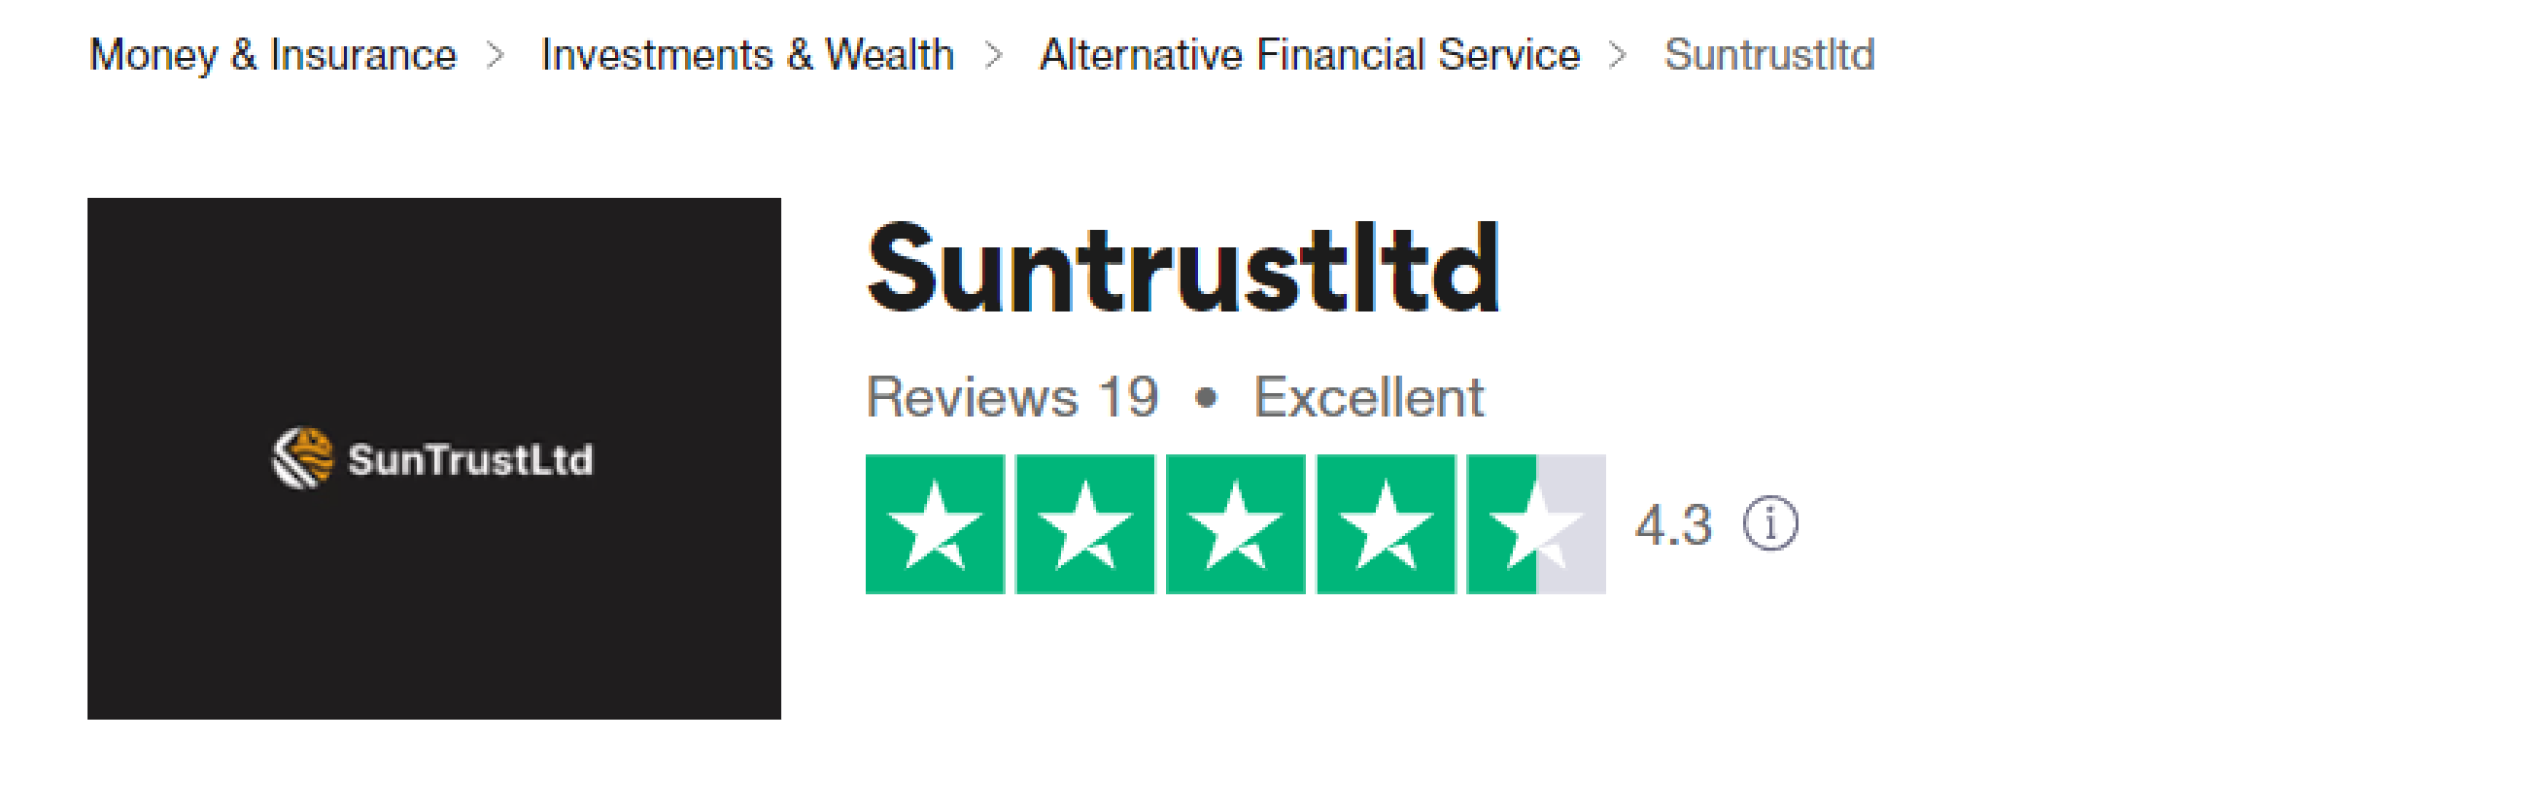 suntrustltd.net reviews trustpilot